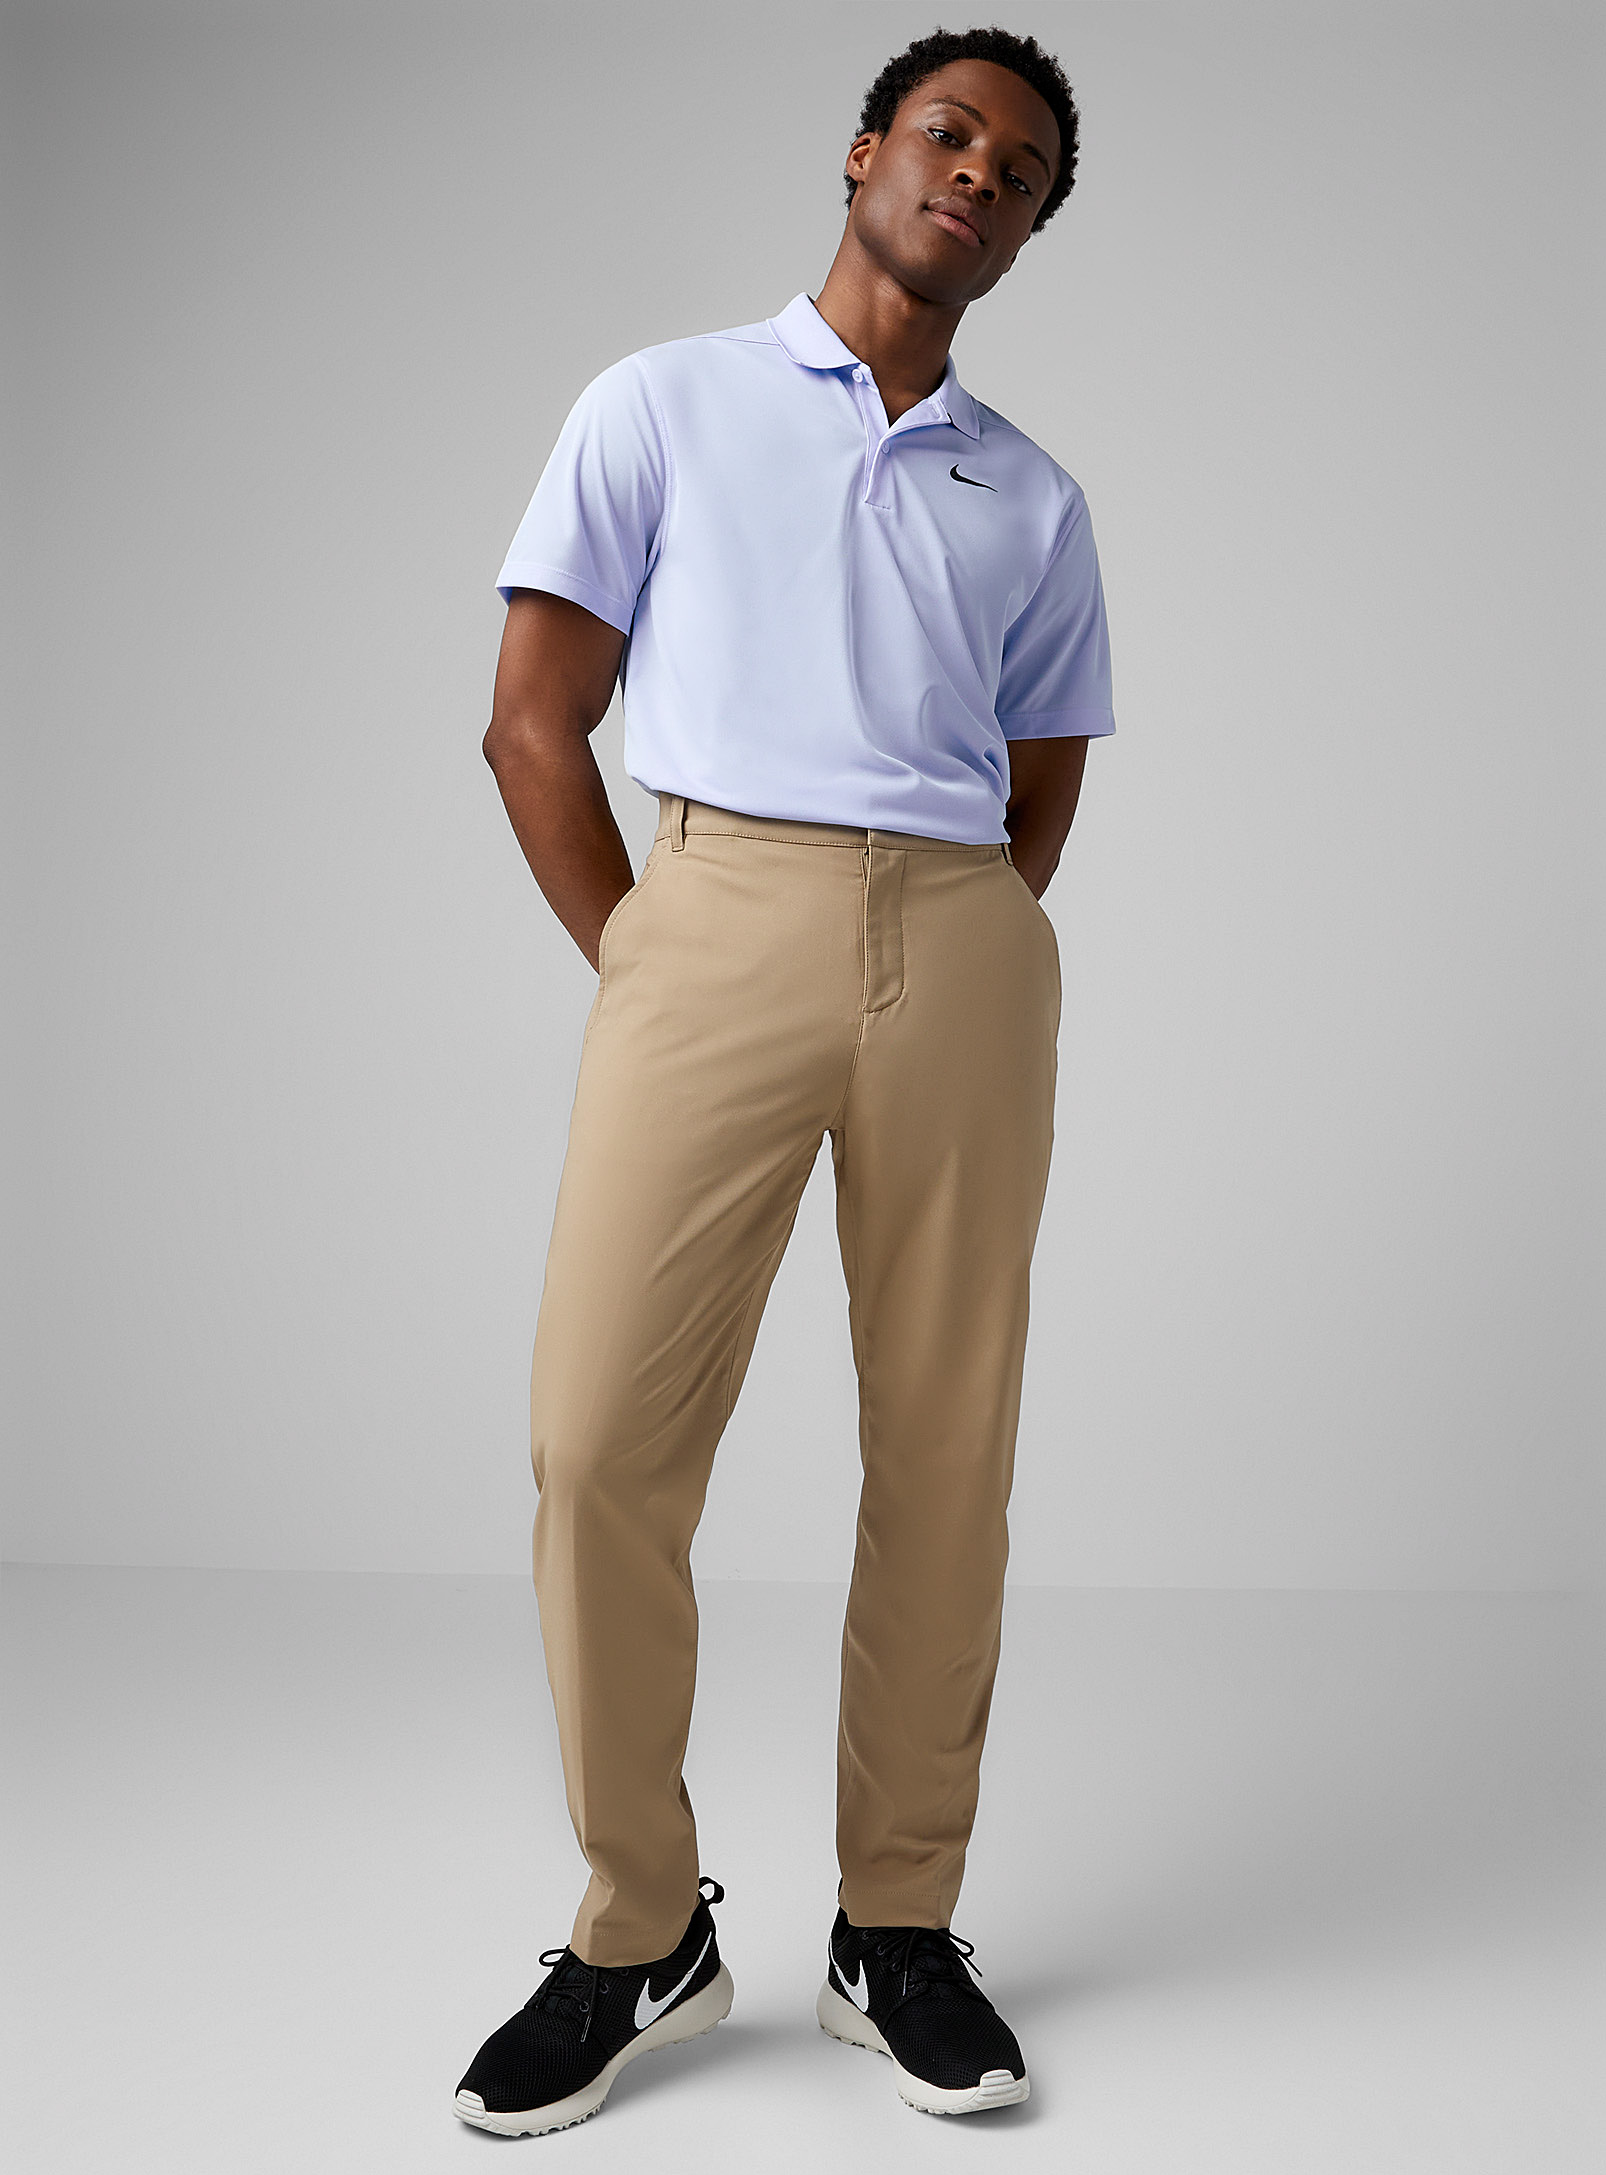 Nike golf - Men's Victory cotton-blend pant